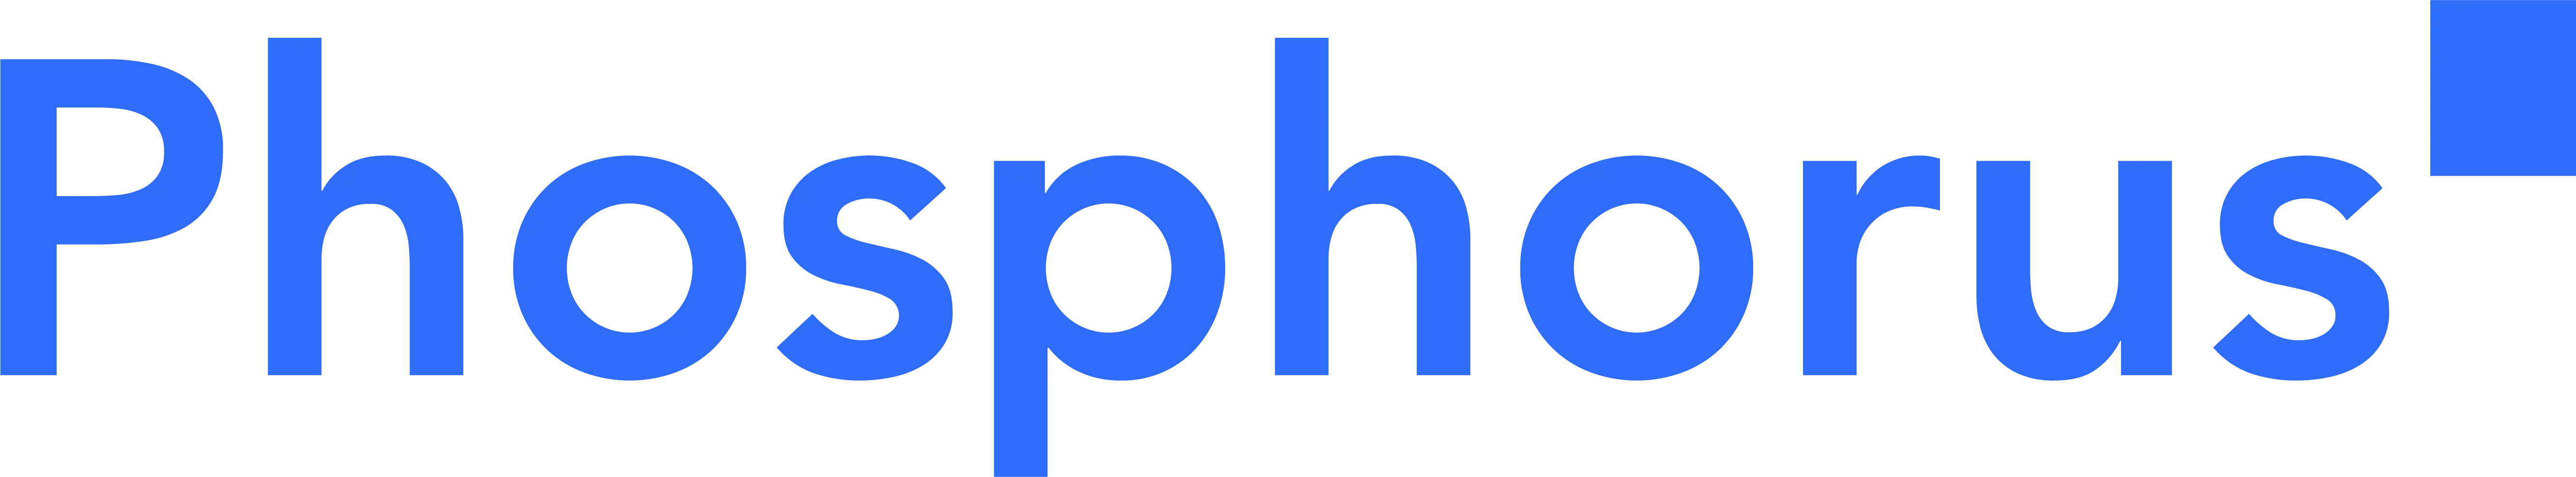 Phosphorus logo